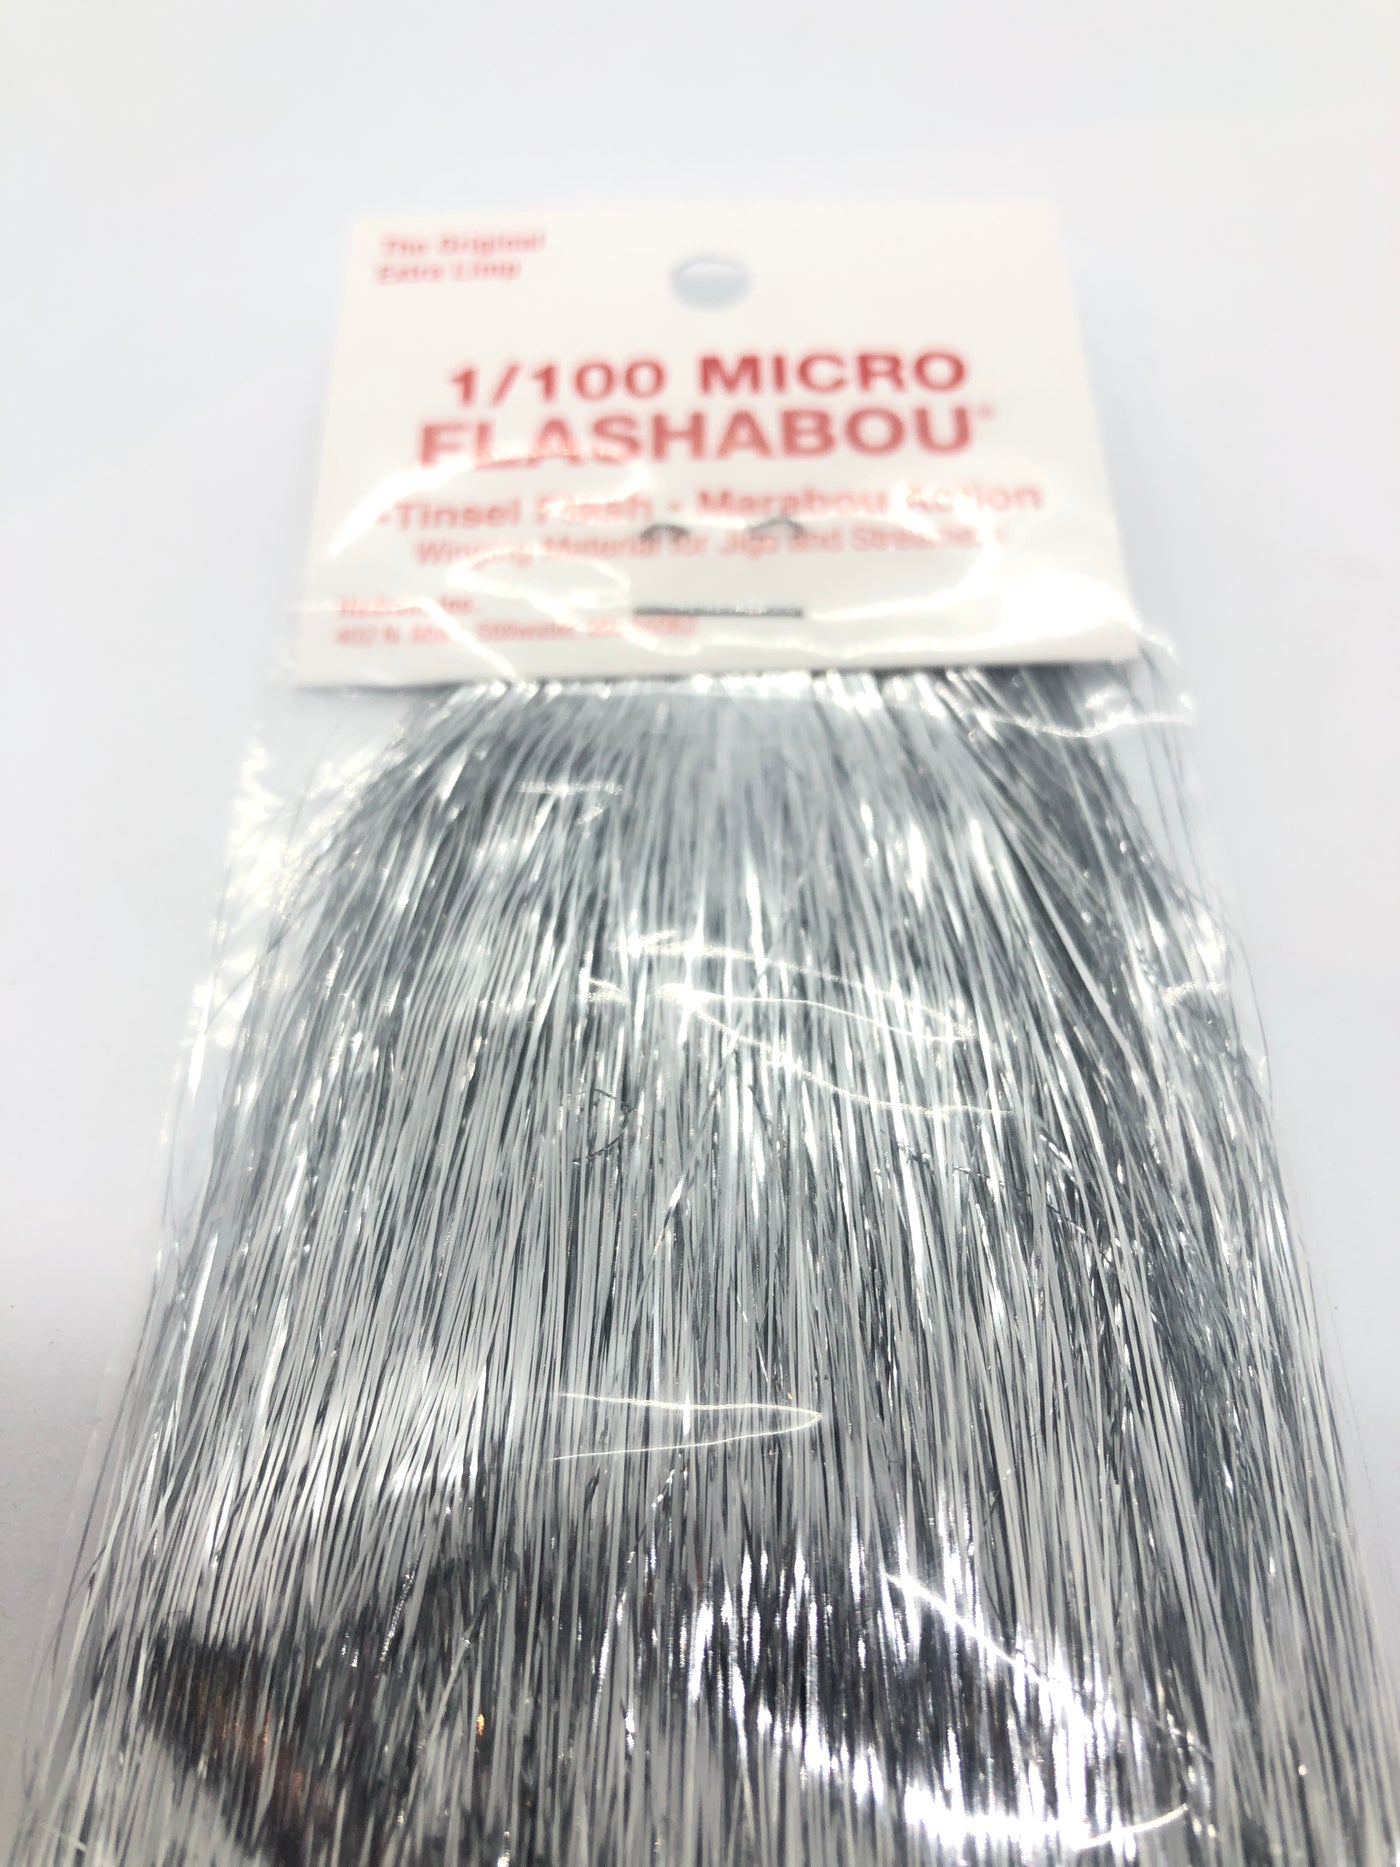 Hedron Inc. Flashabou Micro